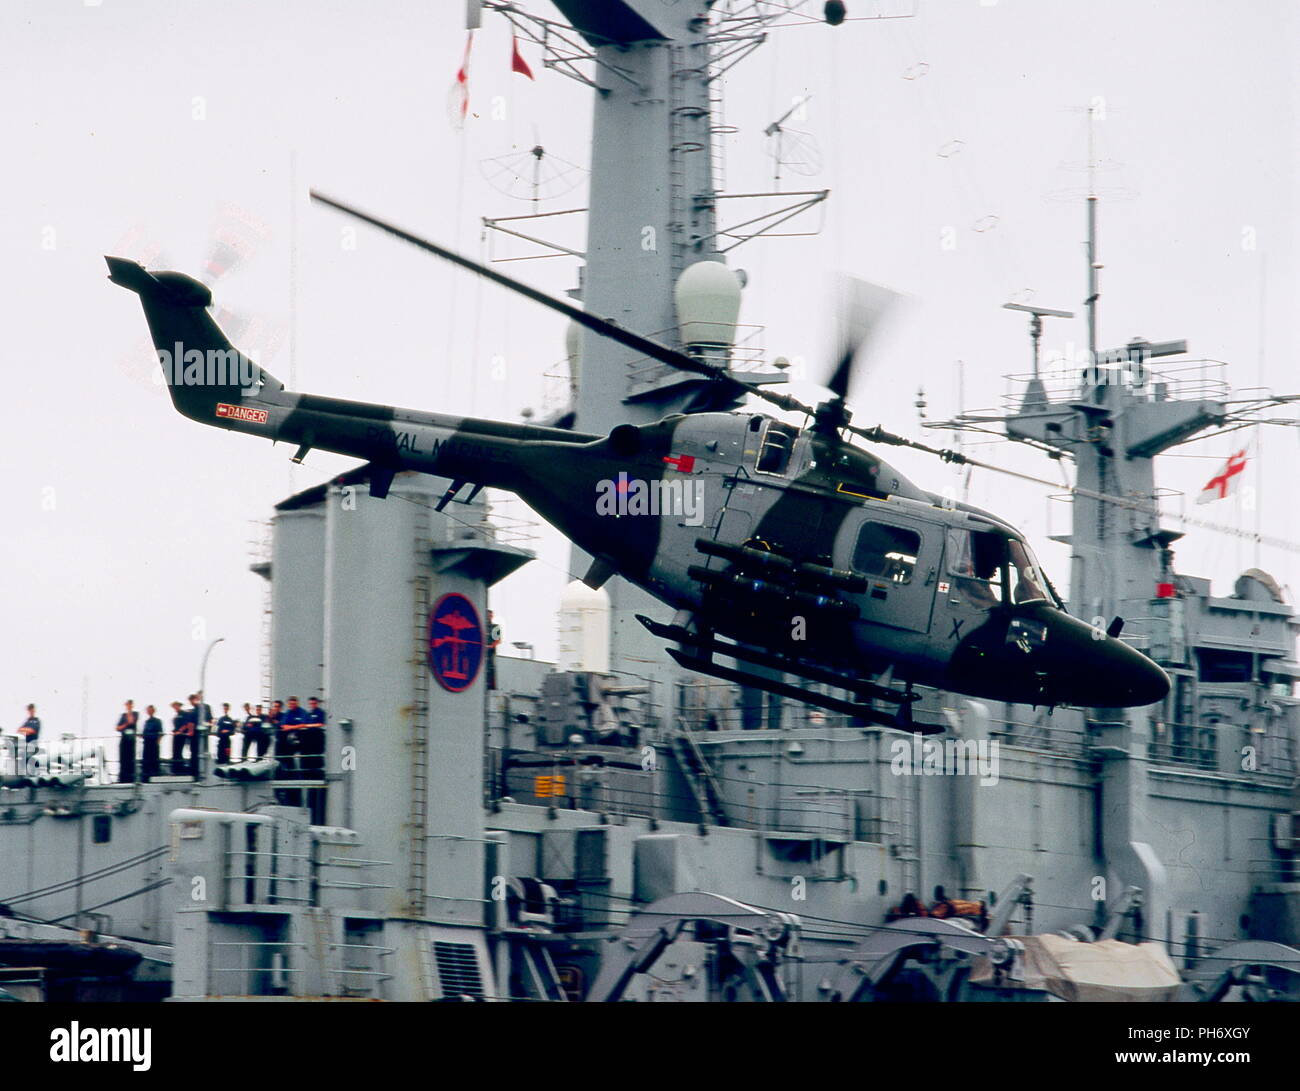 AJAXNETPHOTO. 1992. SOLENT,ANGLETERRE - Airborne - ROYAL MARINES LYNX s'envoler le HMS FEARLESS. PHOTO:JONATHAN EASTLAND/AJAX REF:921116217 Banque D'Images